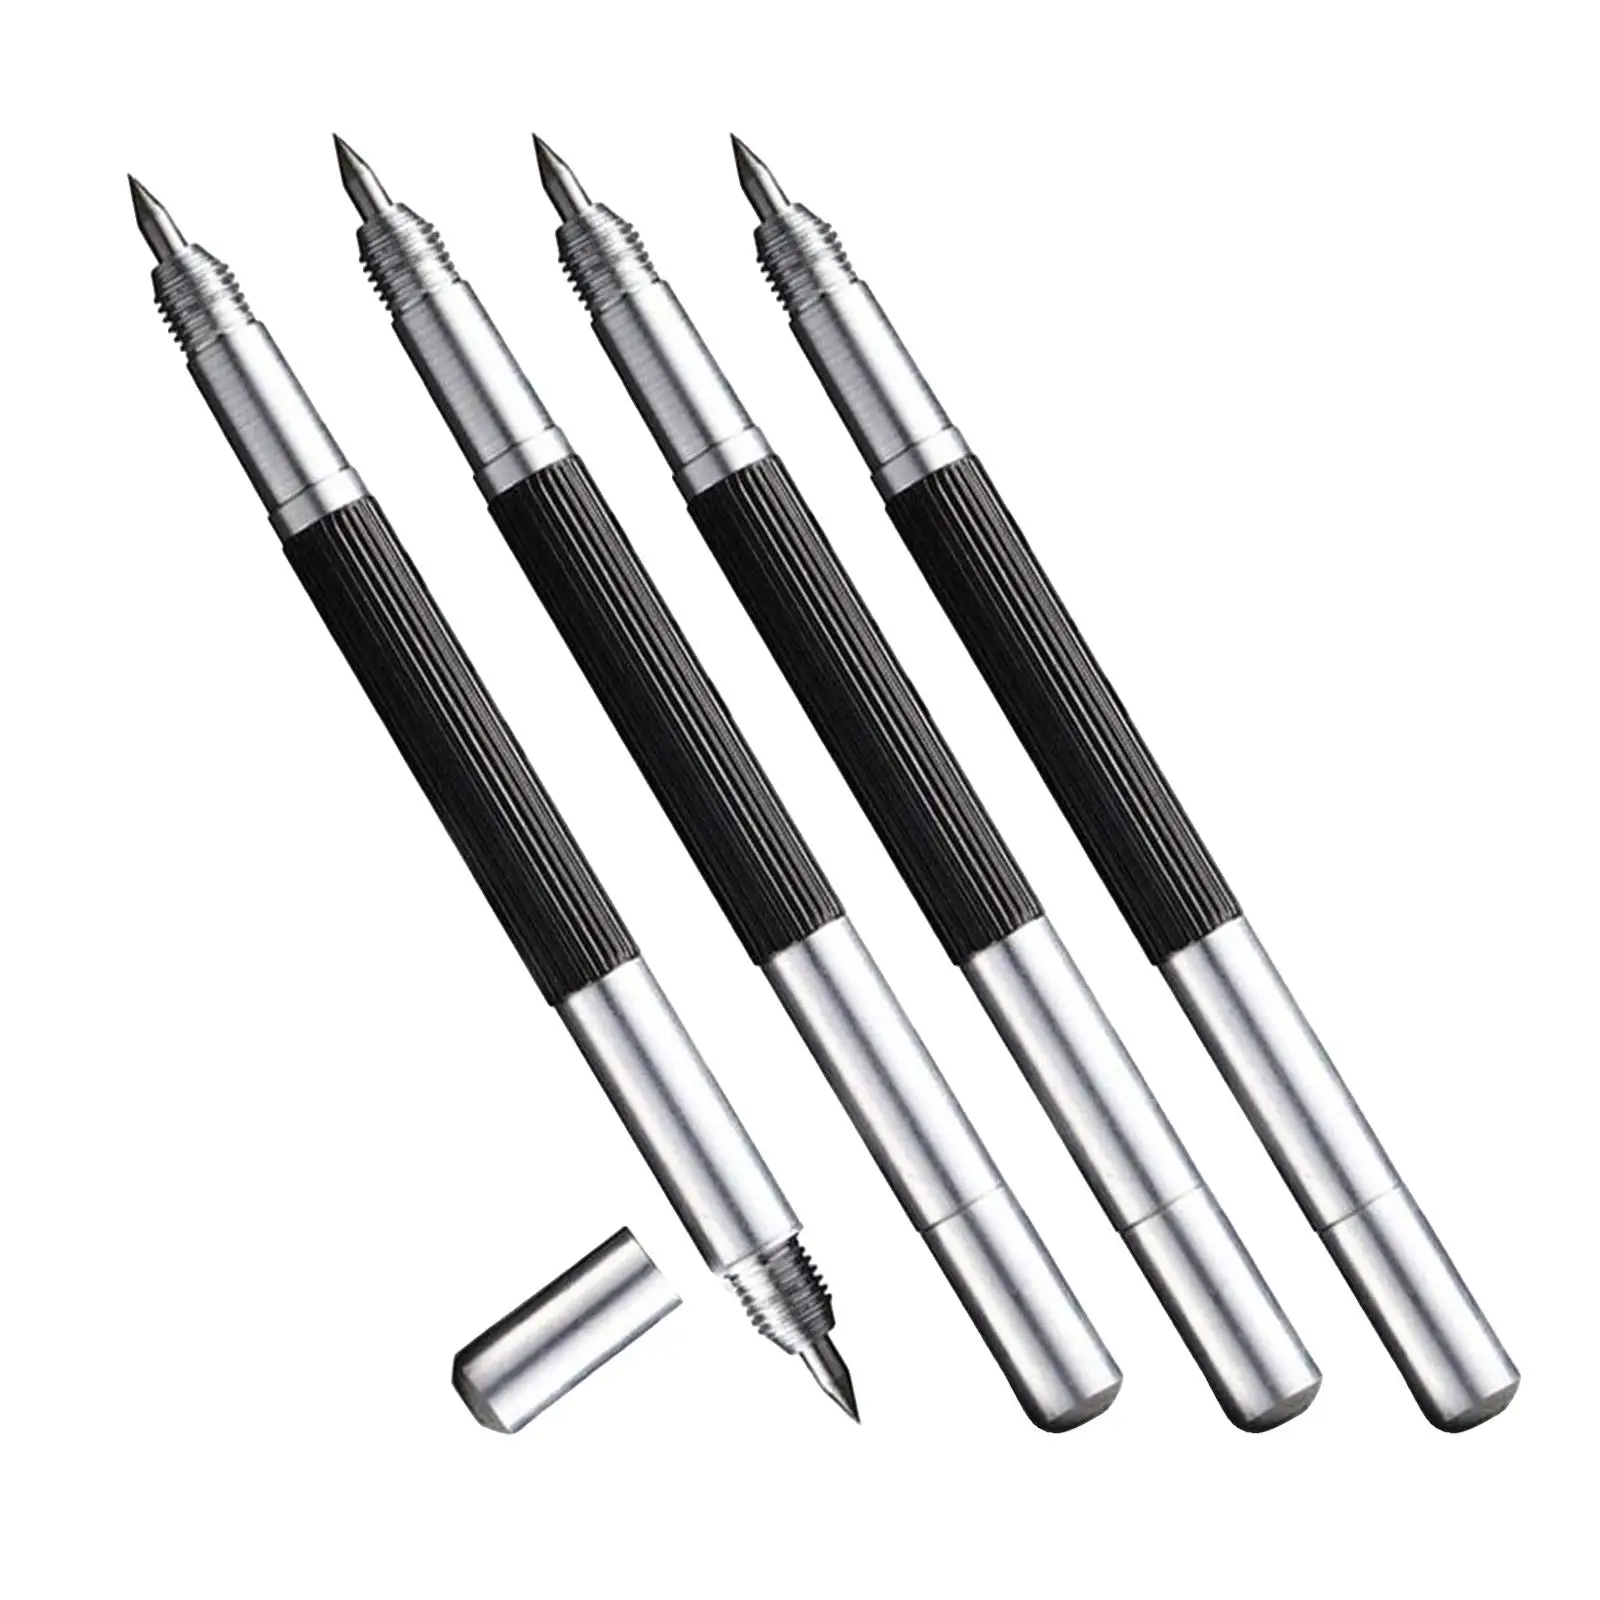 4Pcs Etching Engraving Pen Tungsten Carbide Tip Scriber for 